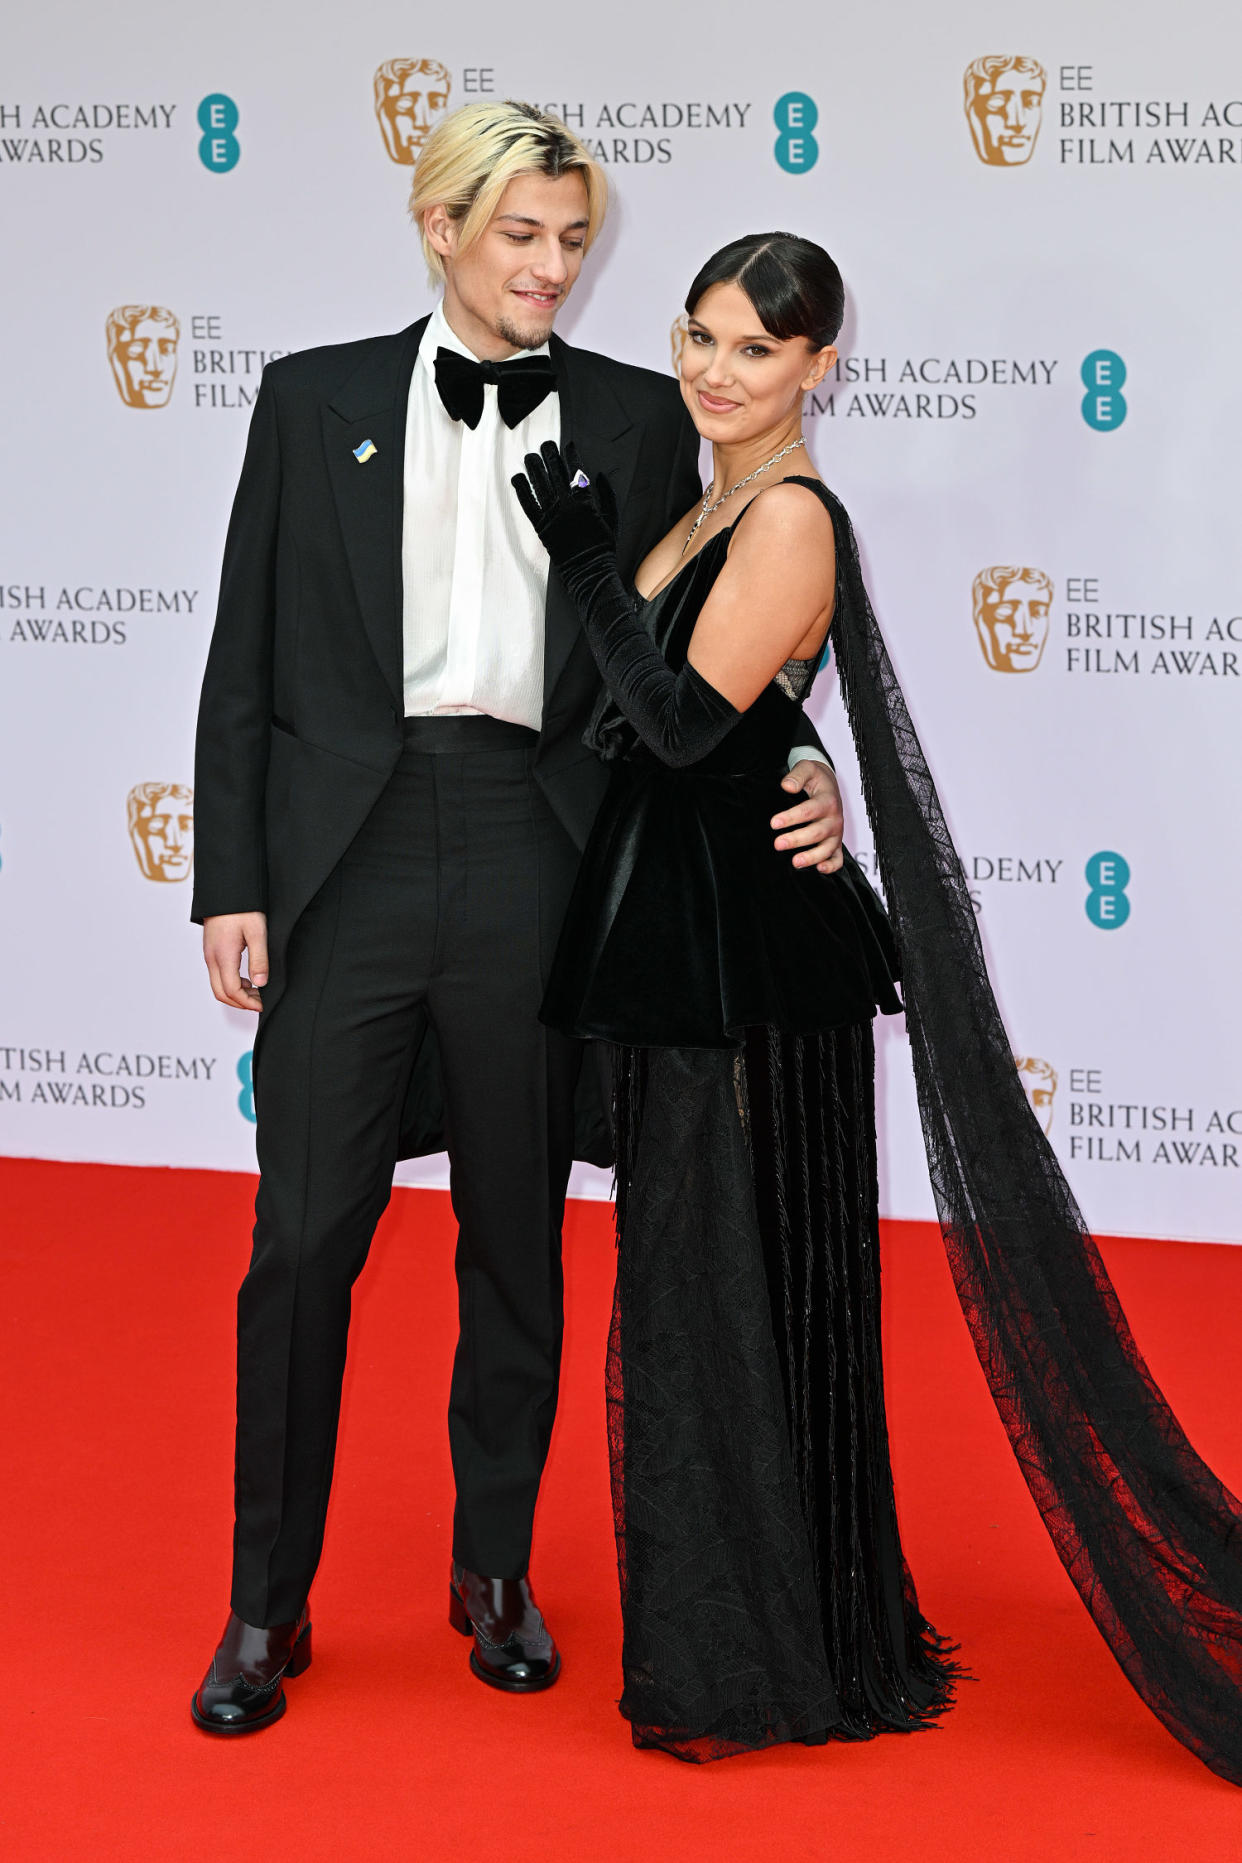 EE British Academy Film Awards 2022 - Red Carpet Arrivals (Stephane Cardinale - Corbis / Corbis via Getty Images)